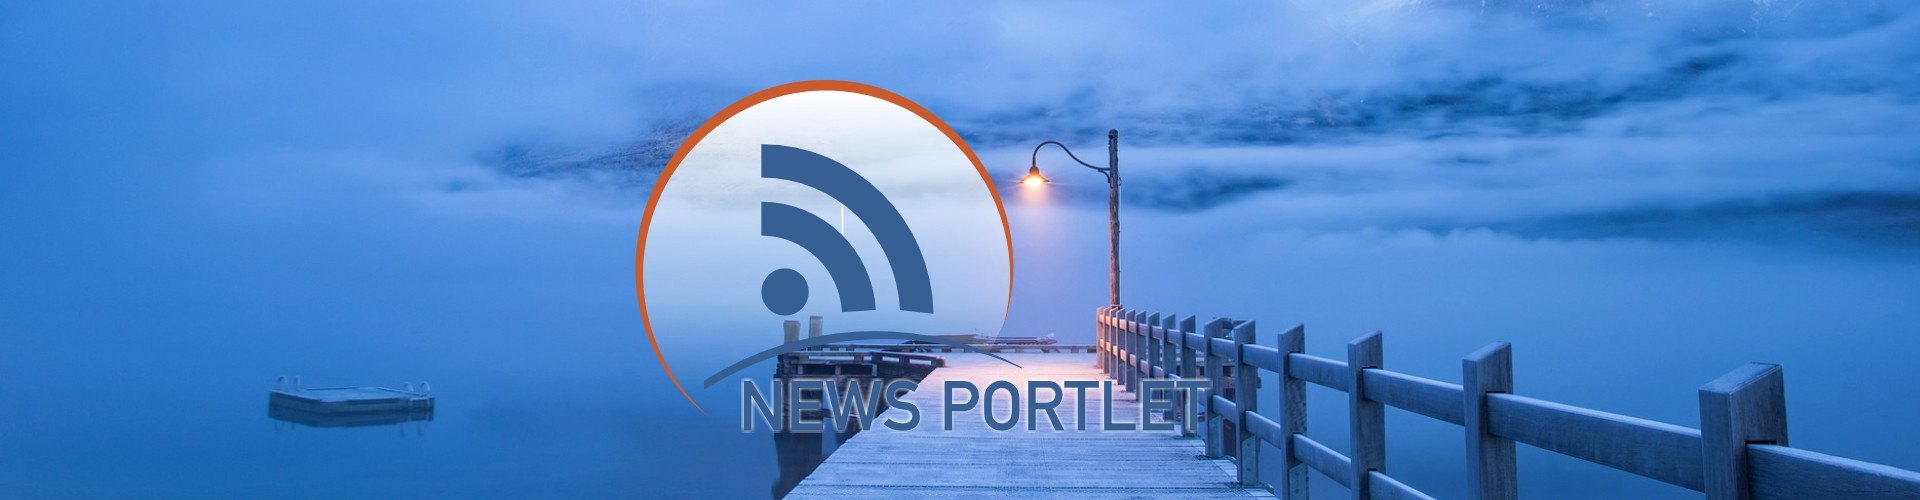 News Portlet - A small frozen pier